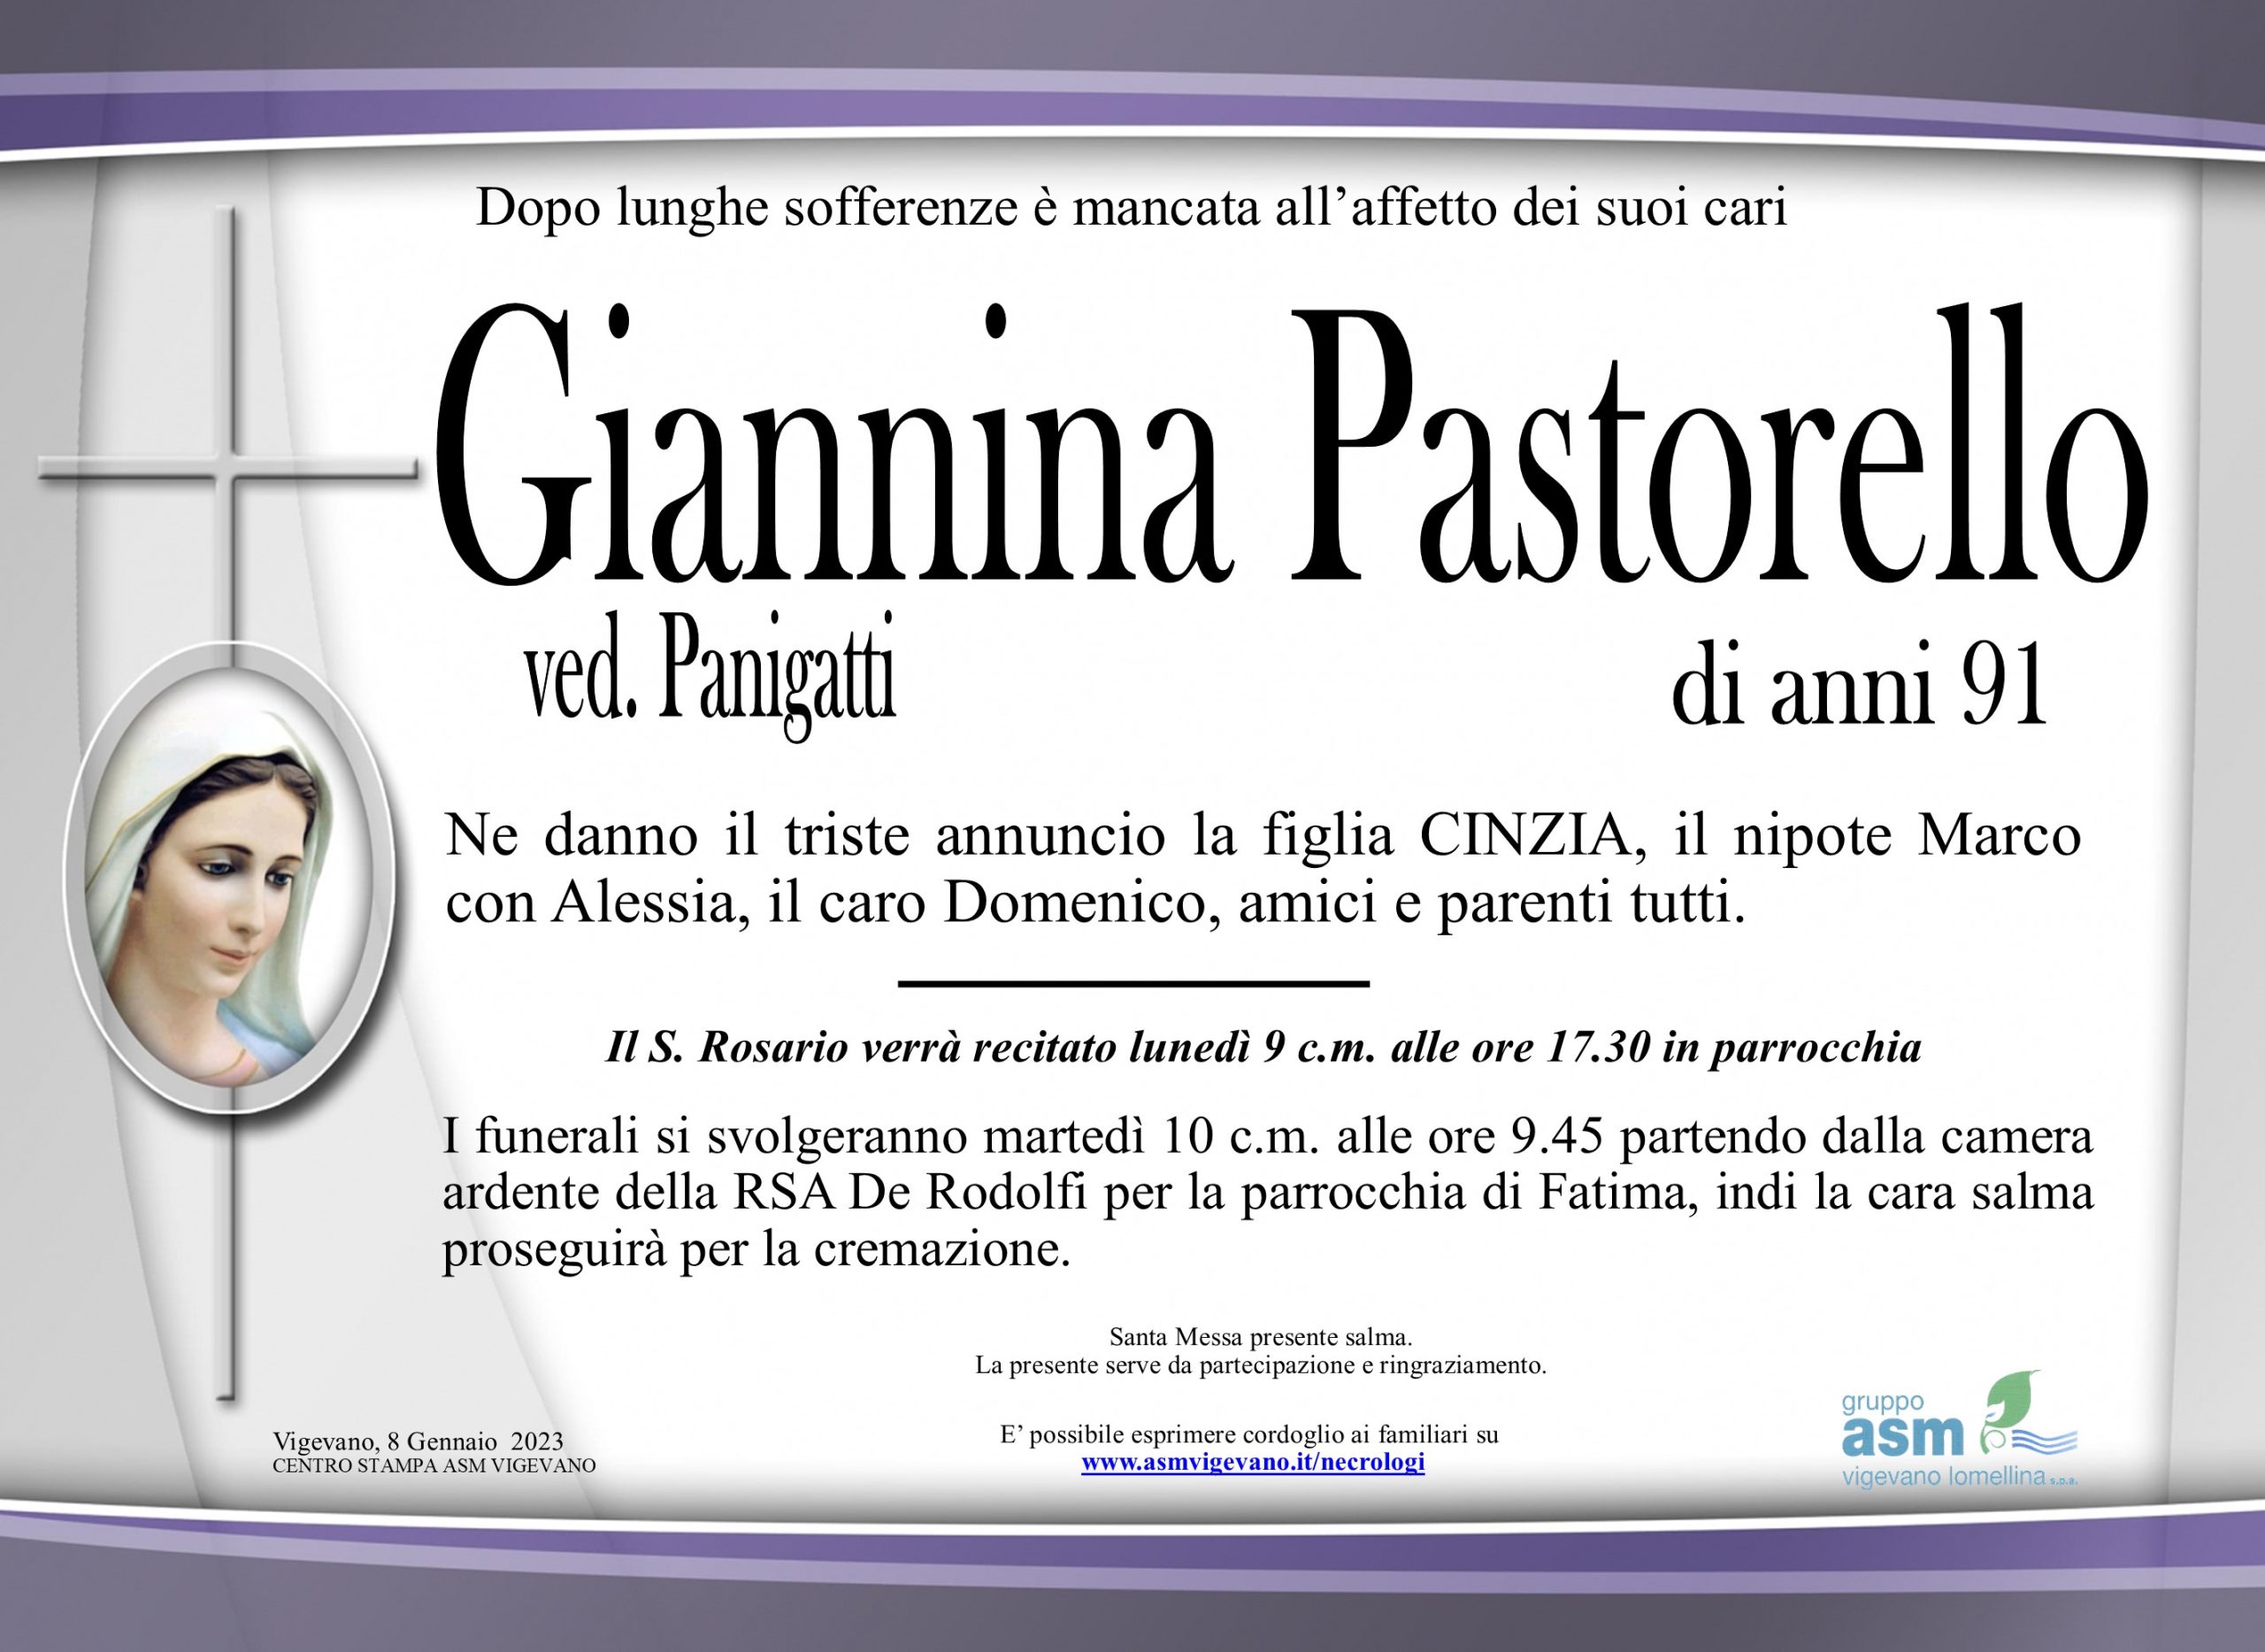 Giannina Pastorello